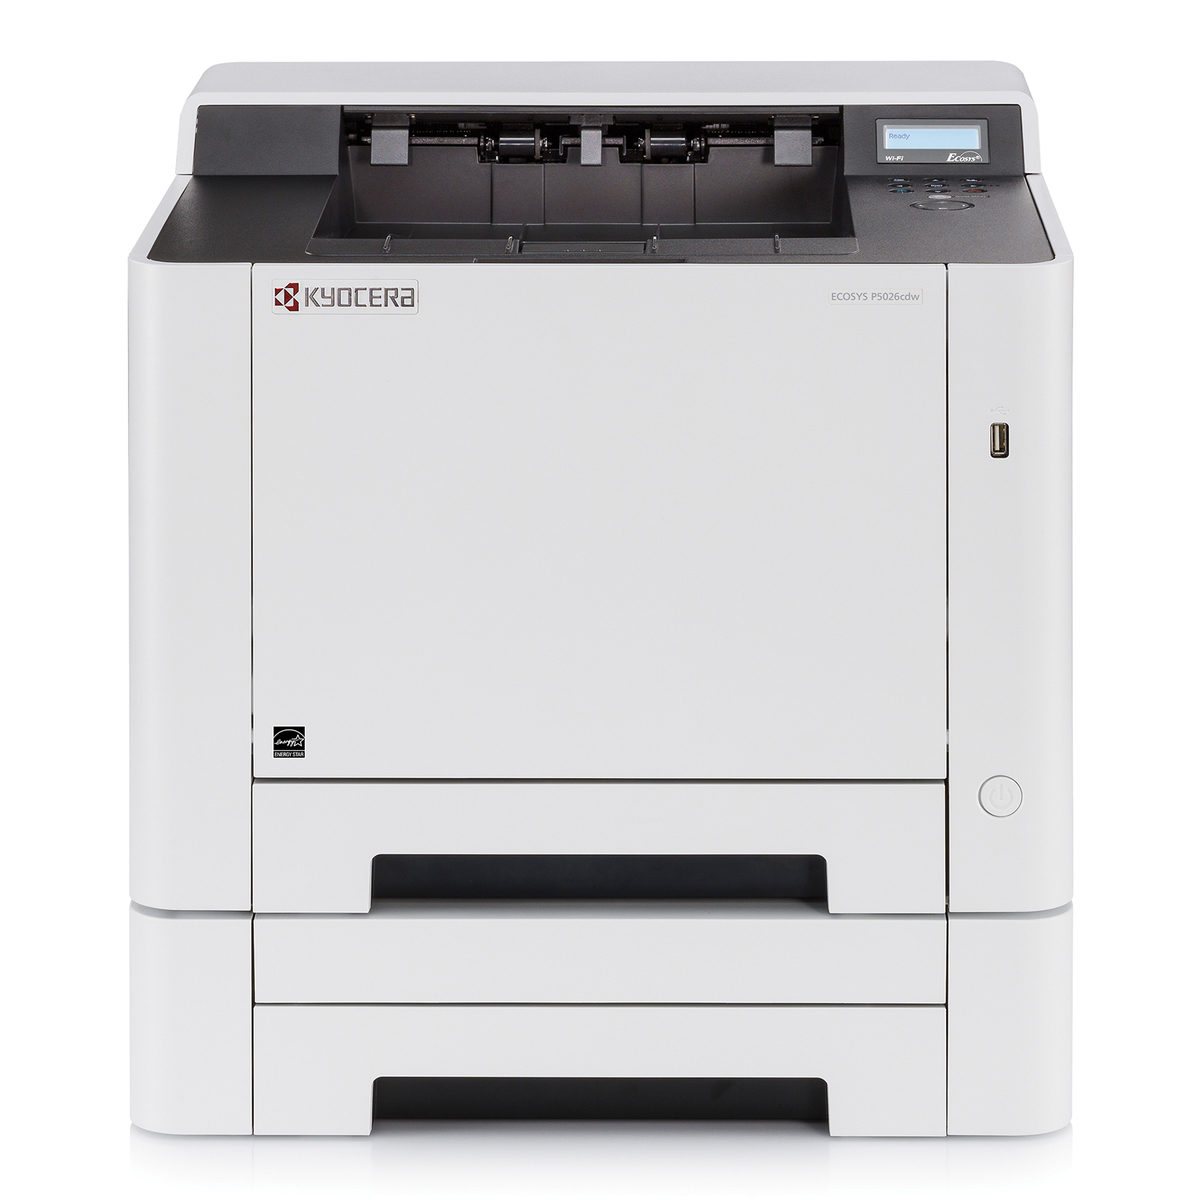 Kyocera Printers:  The Kyocera ECOSYS P5026cdw Printer